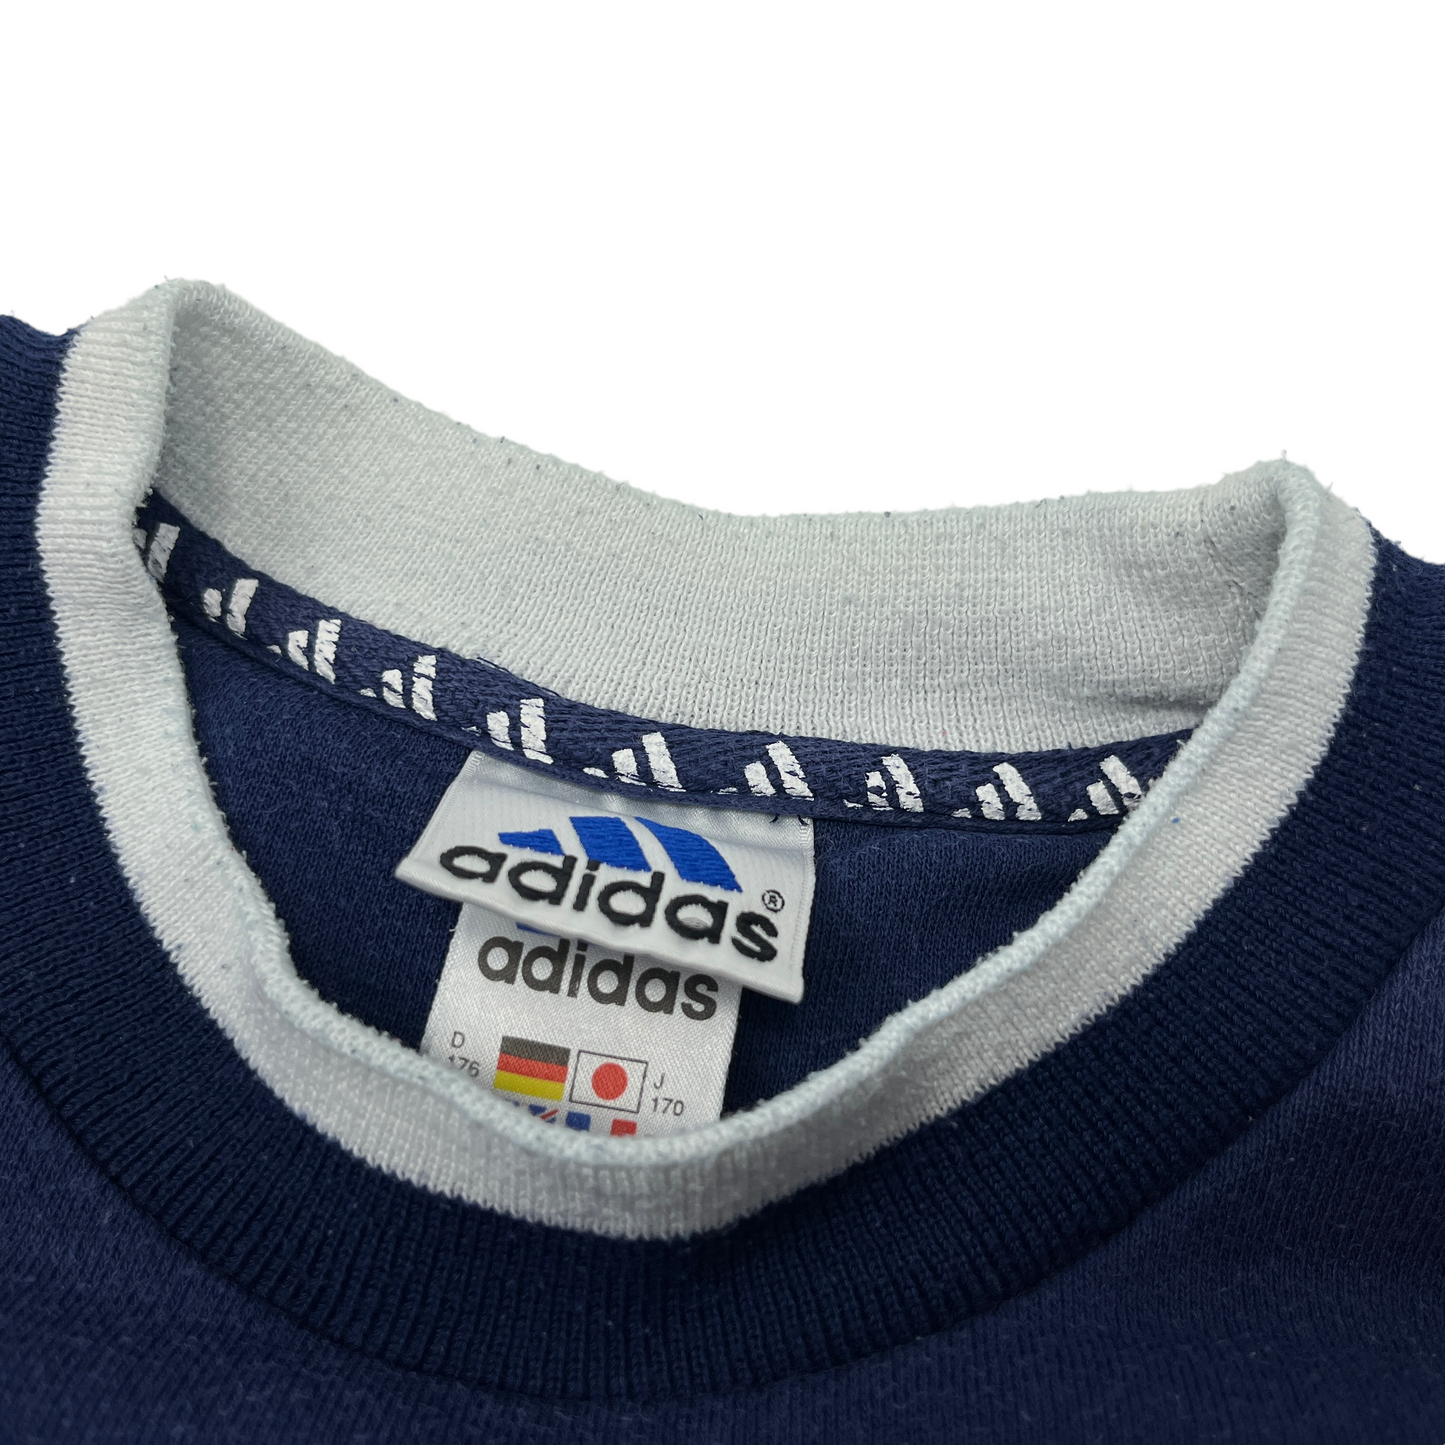 01119 Adidas Real Madrid Sweater